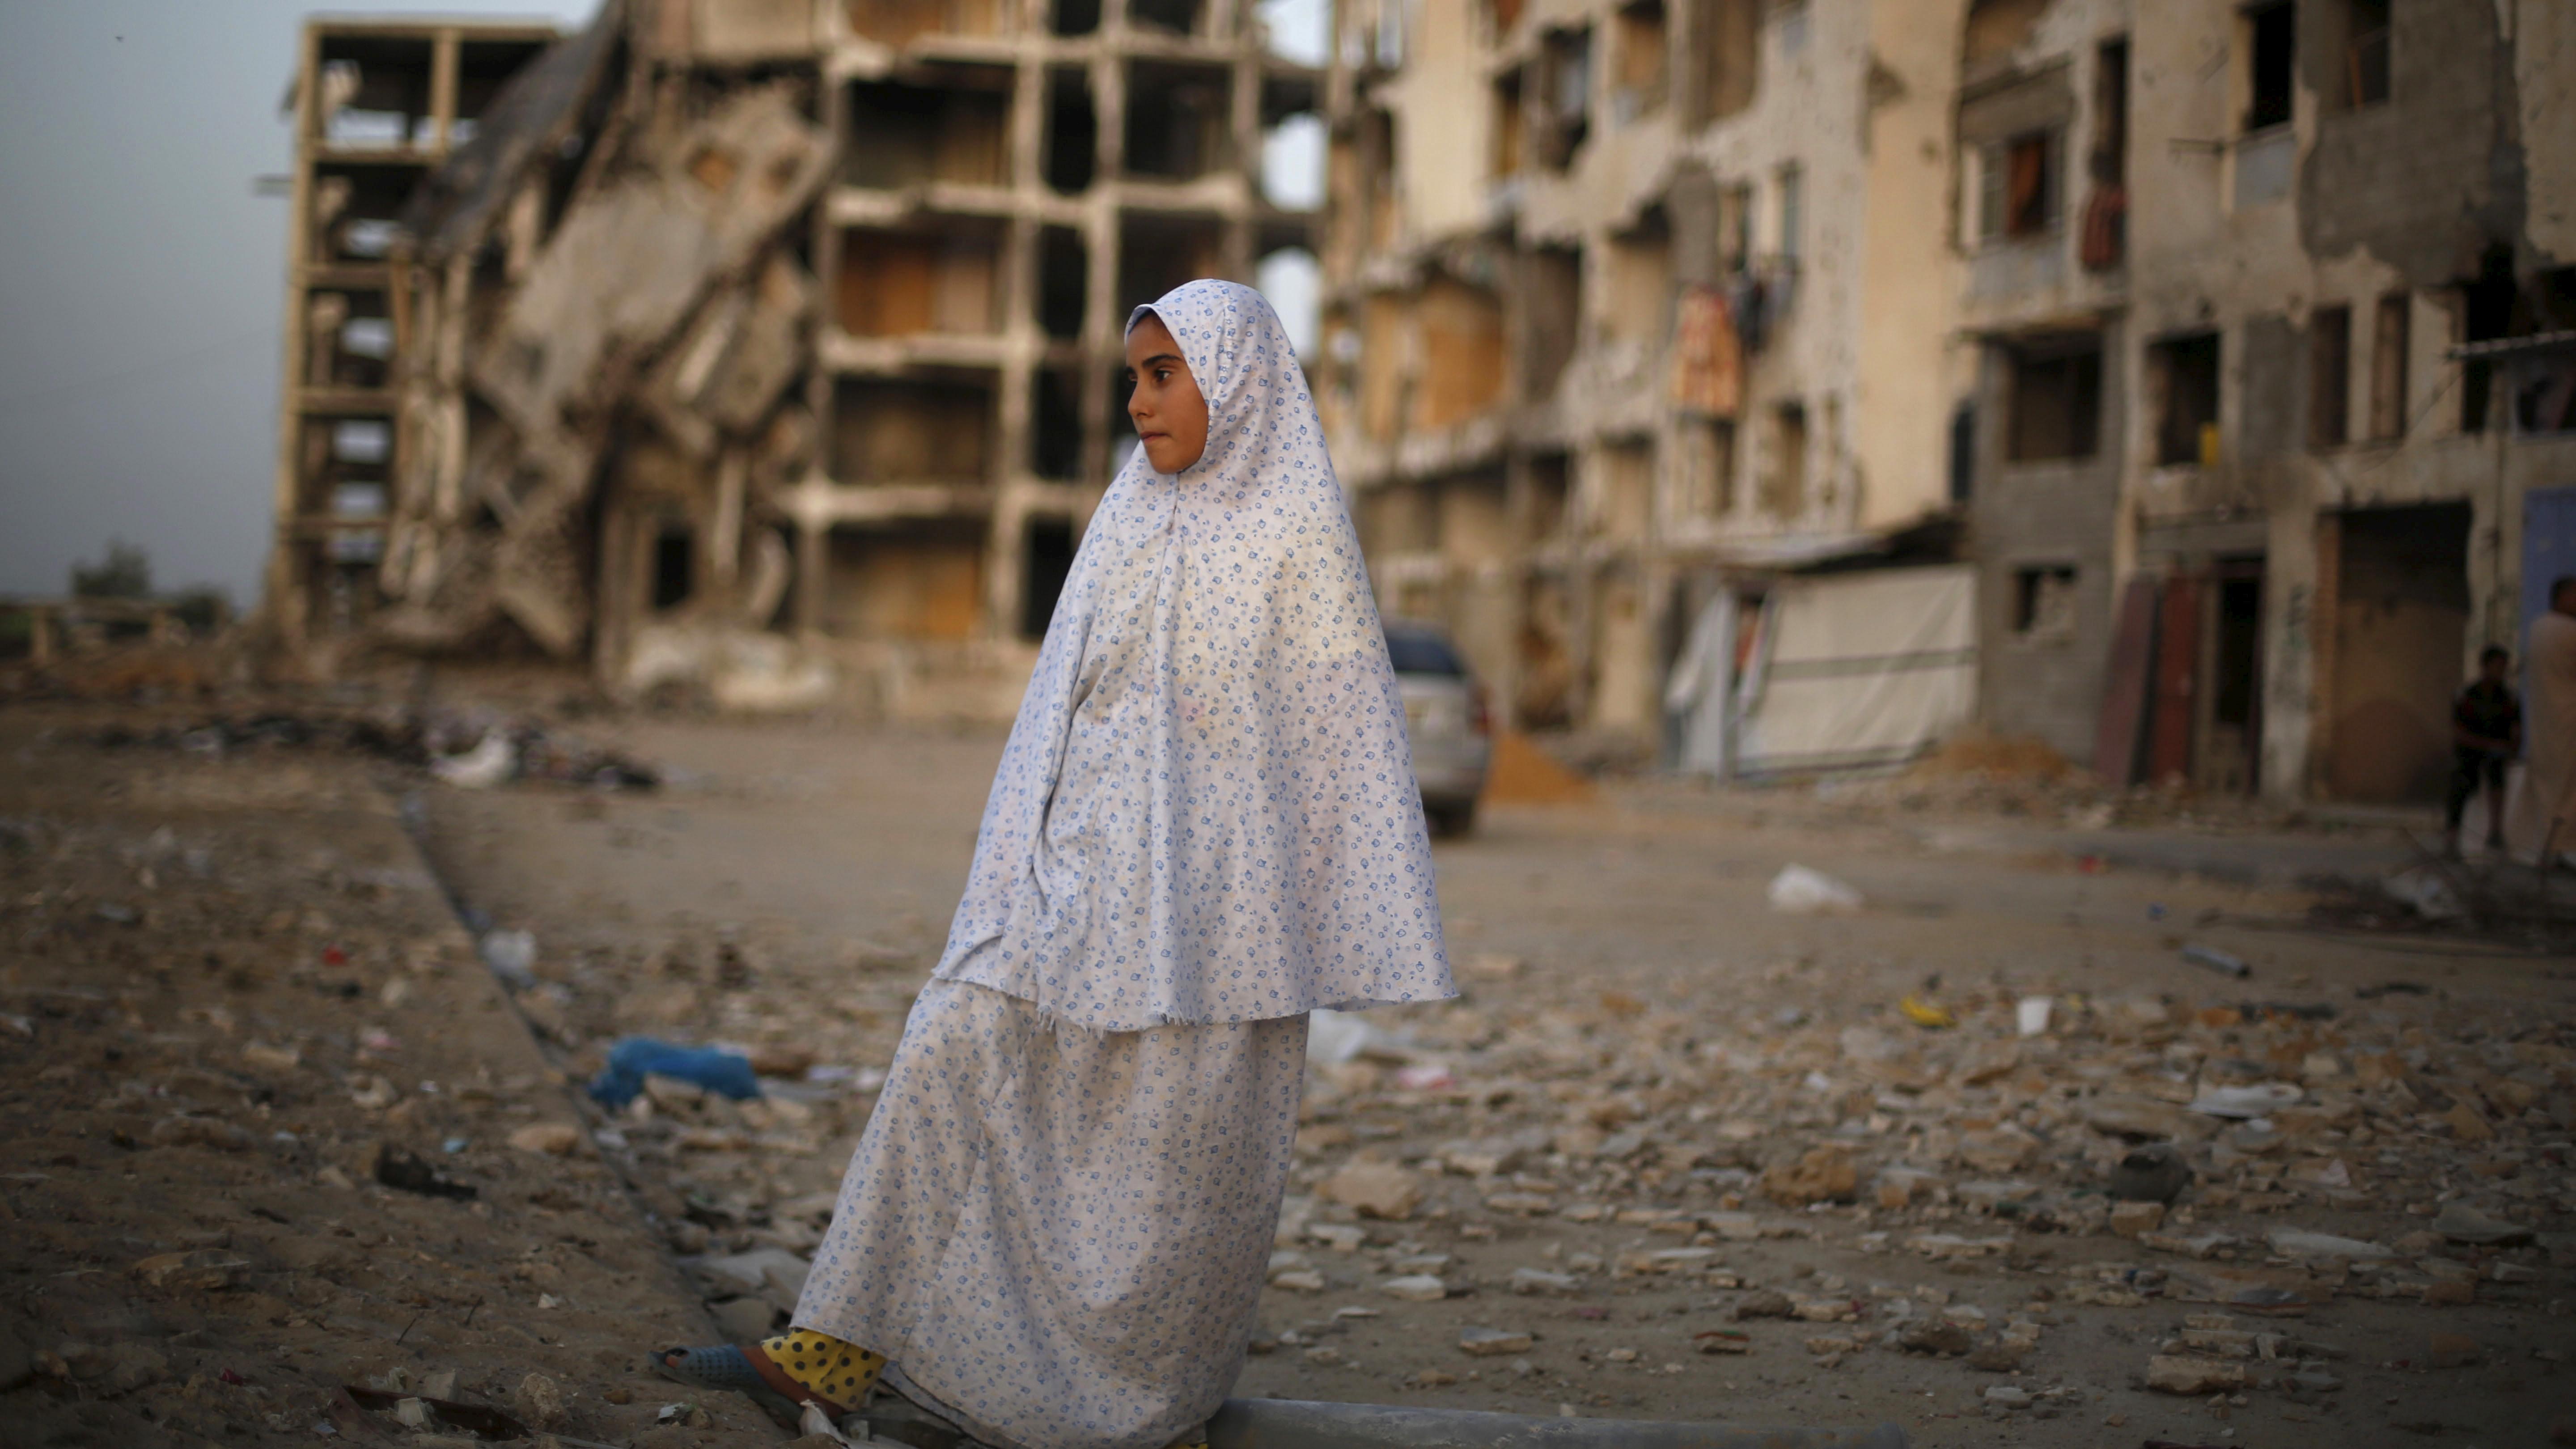 Israel's 2014 invasion of Gaza devastated the coastal enclave and left over 2,000 people dead.